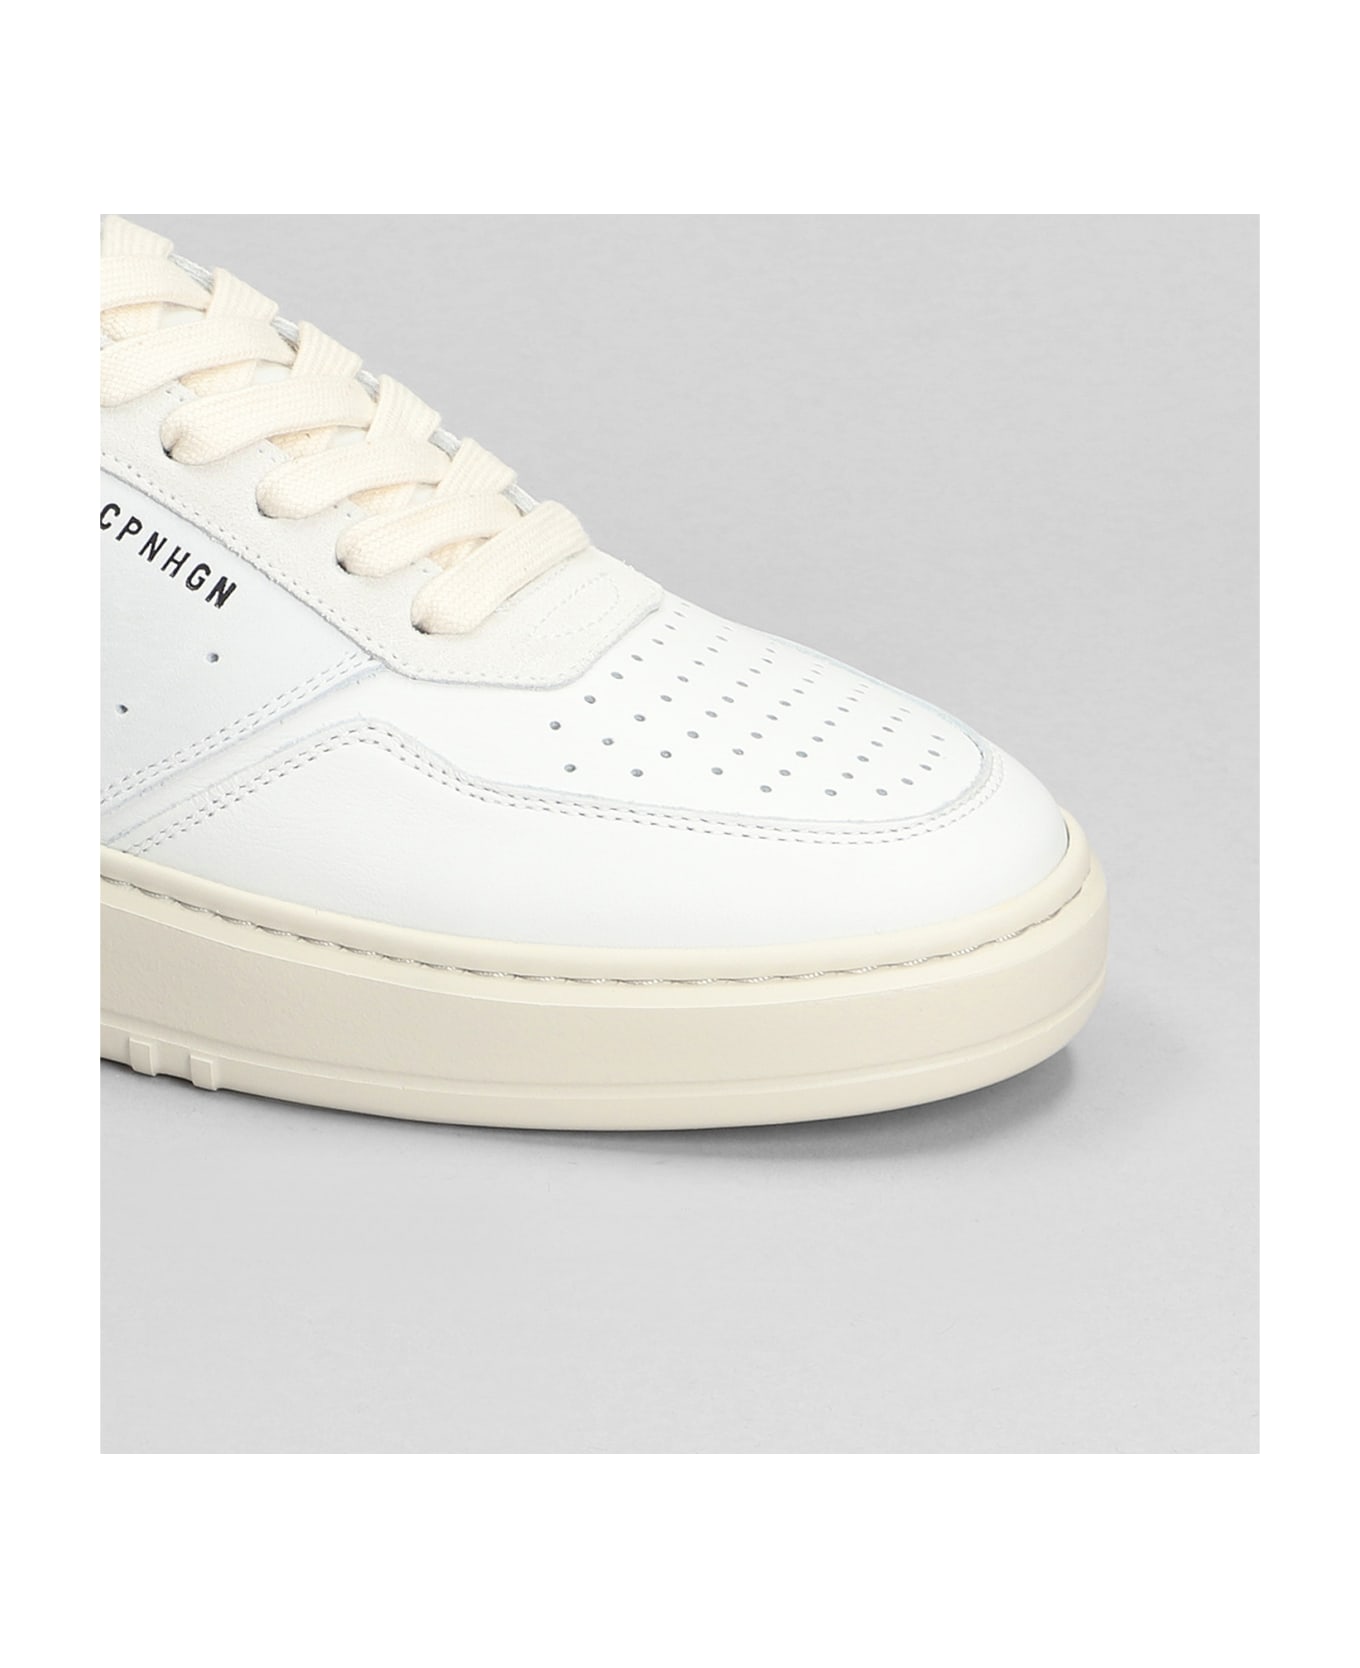 Copenhagen Sneakers In White Leather - white